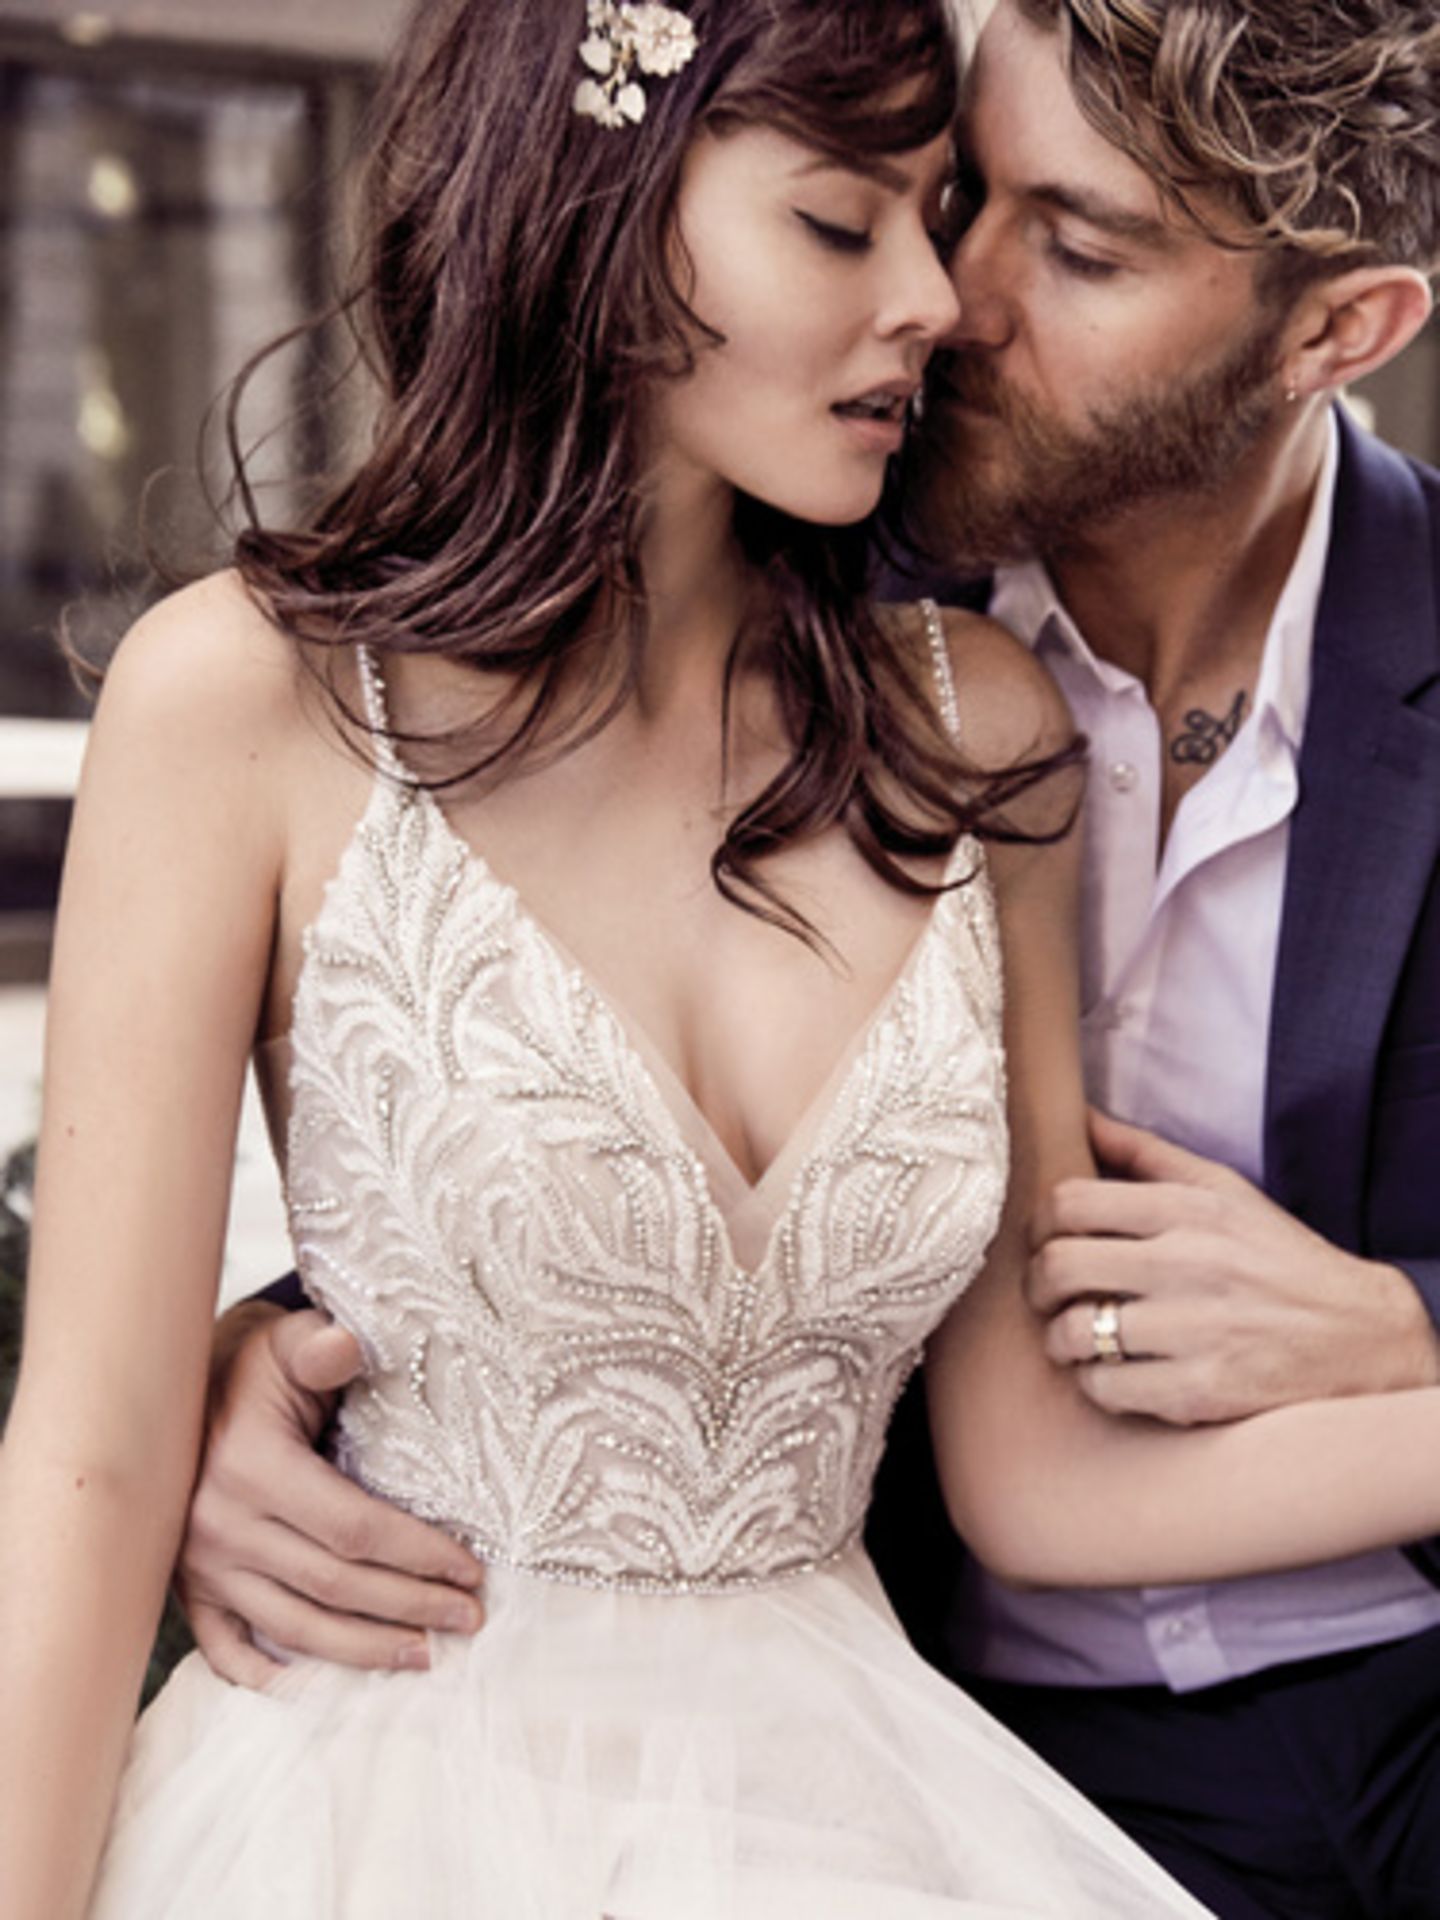 1 x MAGGIE SOTTERO 'Charlene' Boho-Style Aline Designer Wedding Dress Bridal Gown - RRP £1,900 - Image 7 of 15